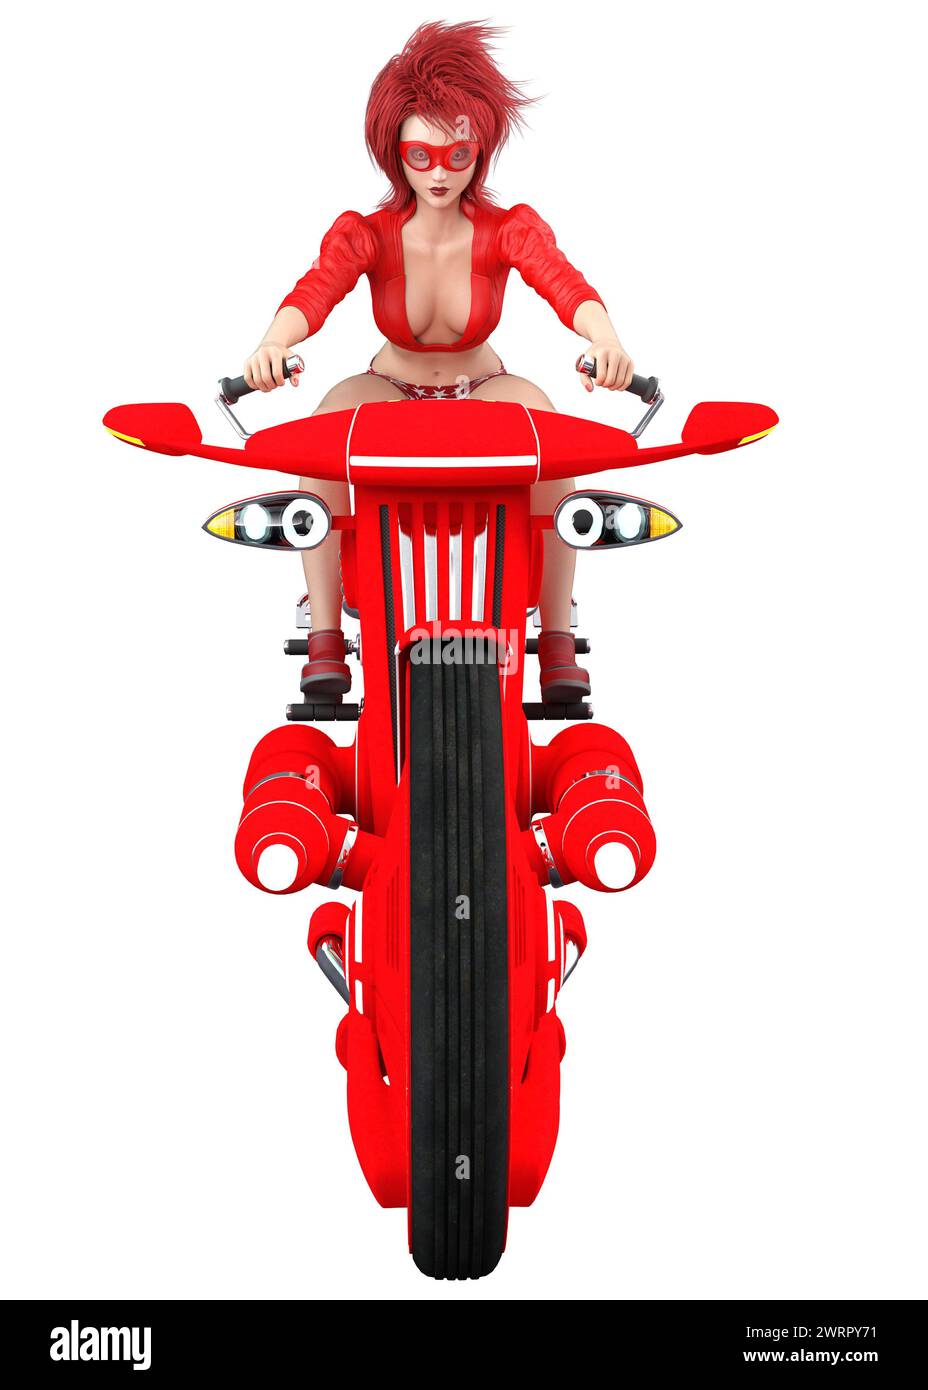 Anime punk girl on futuristic red motorbike, 3D Illustration. Stock Photo